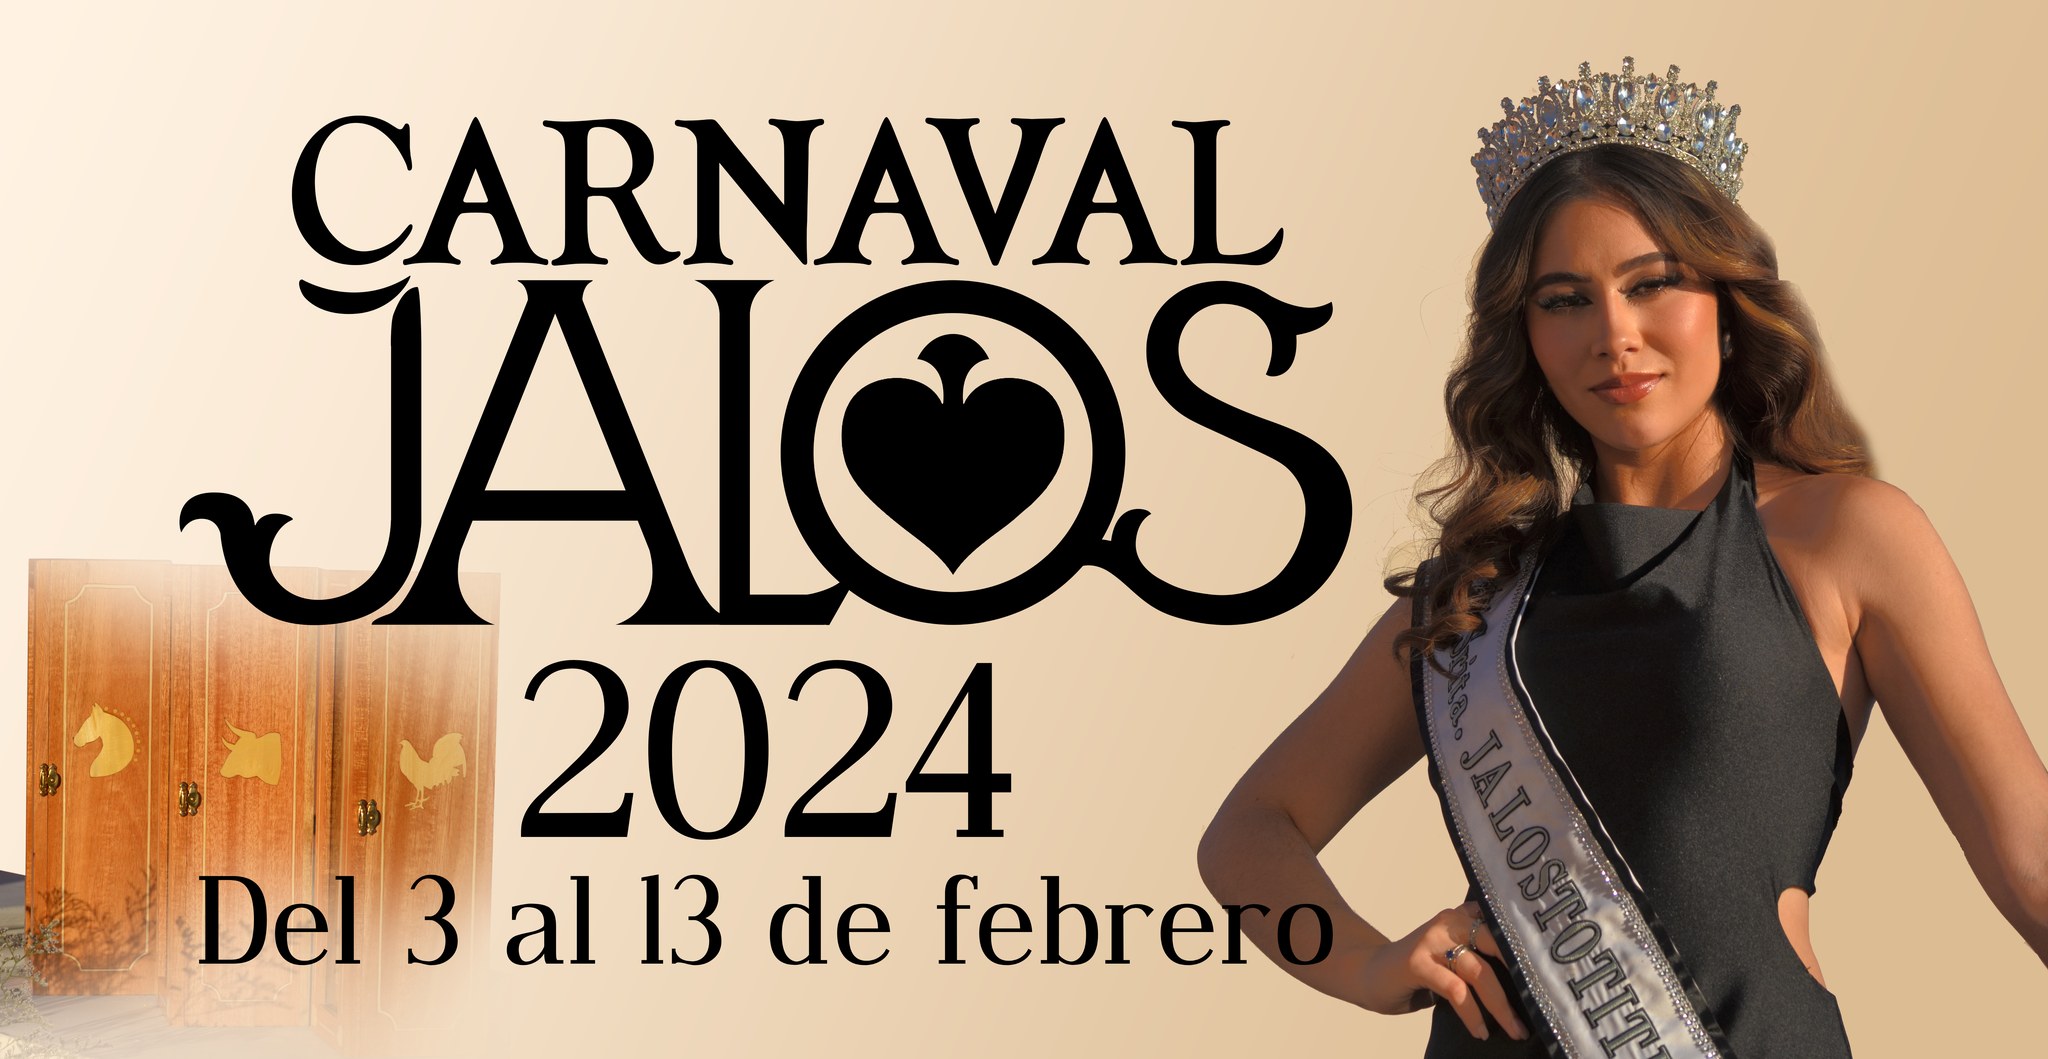 Carnaval Jalos 2024